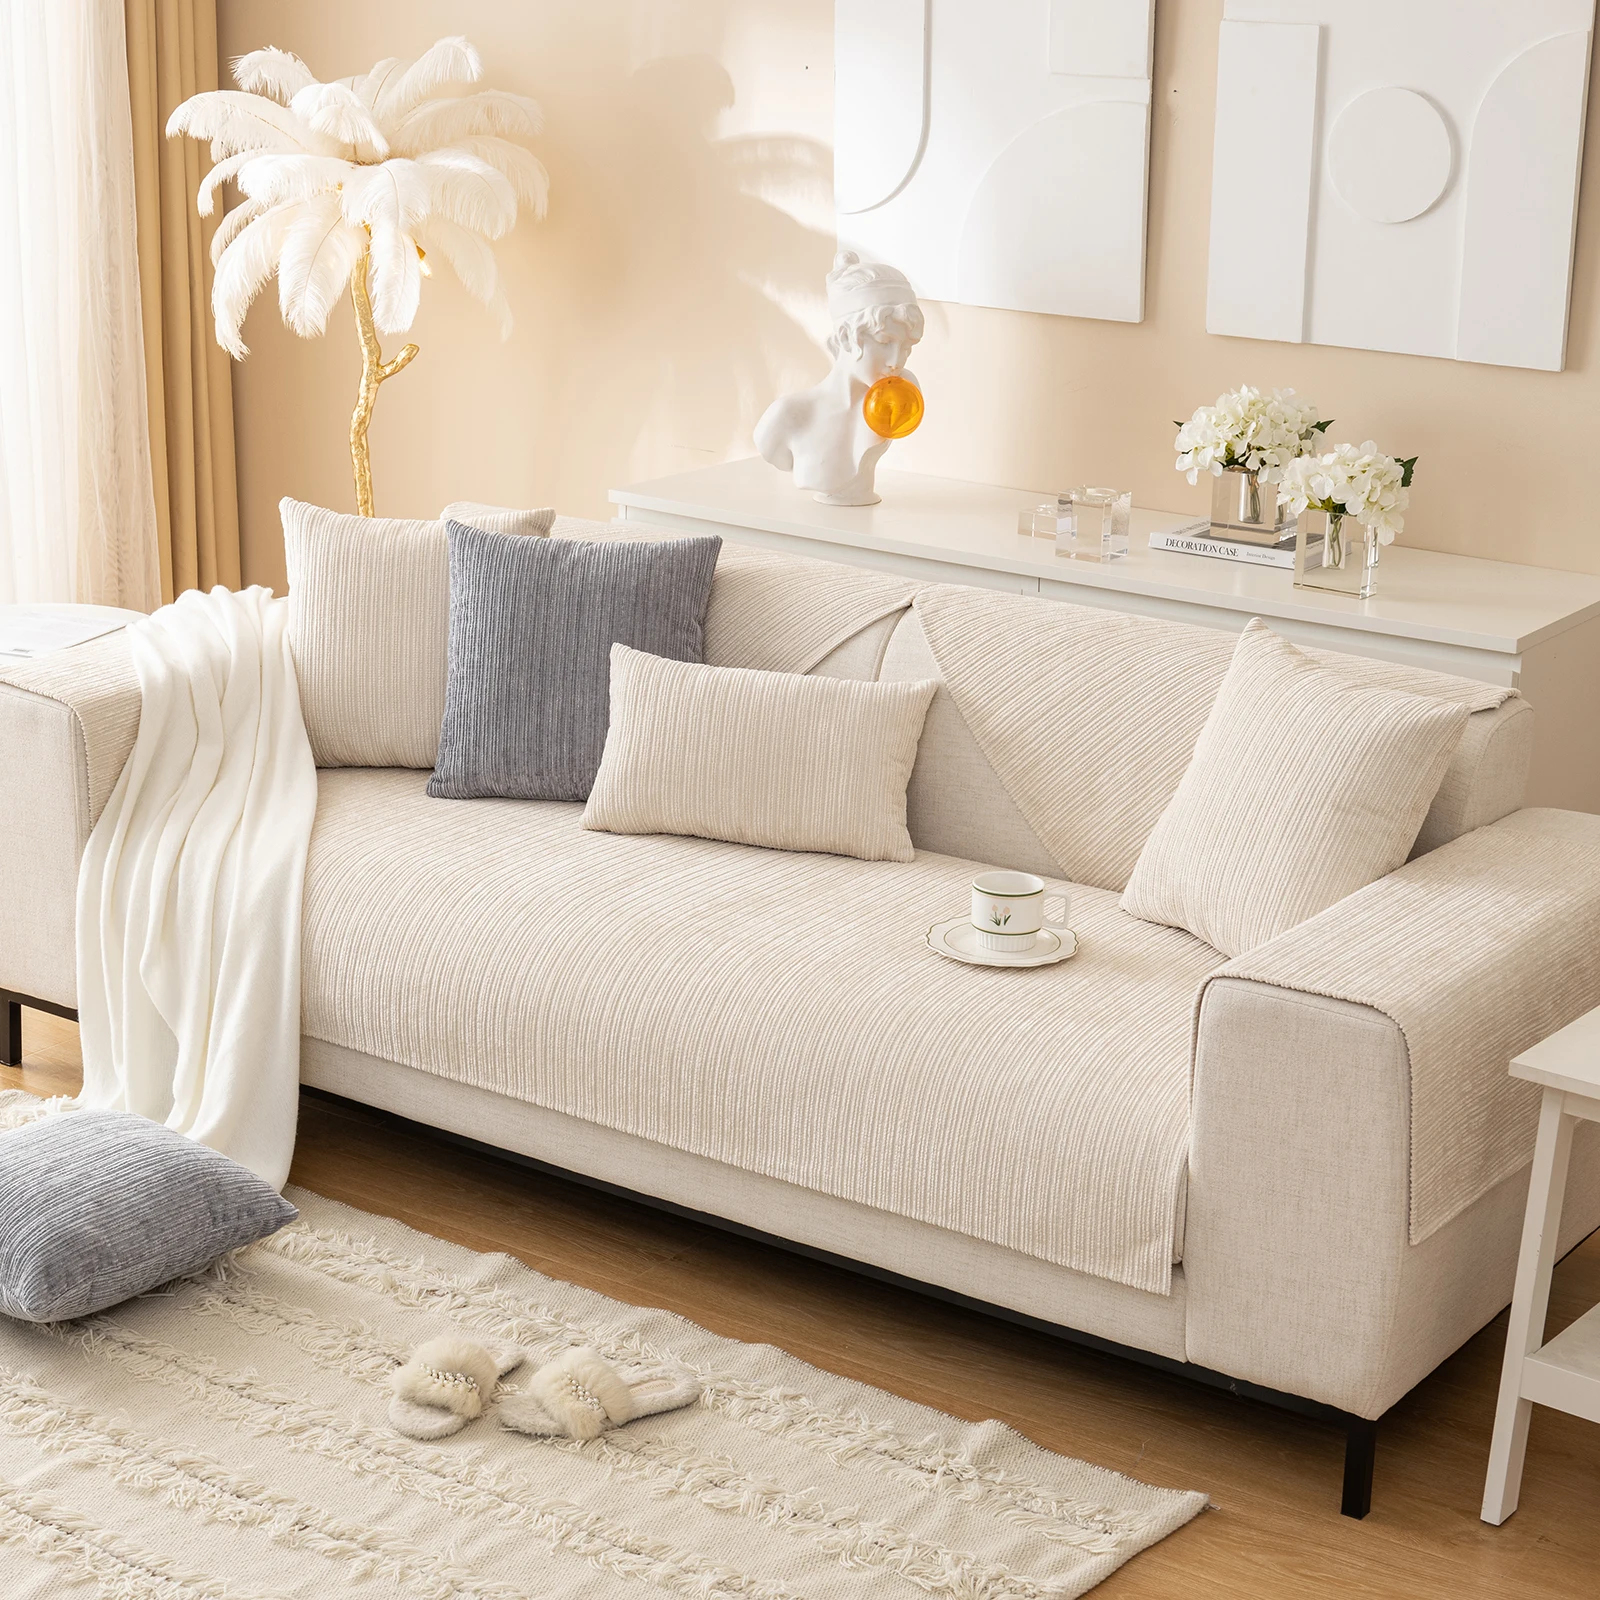 Luxury Wool Sofa Topper in Peony - The Stylish Dog Company